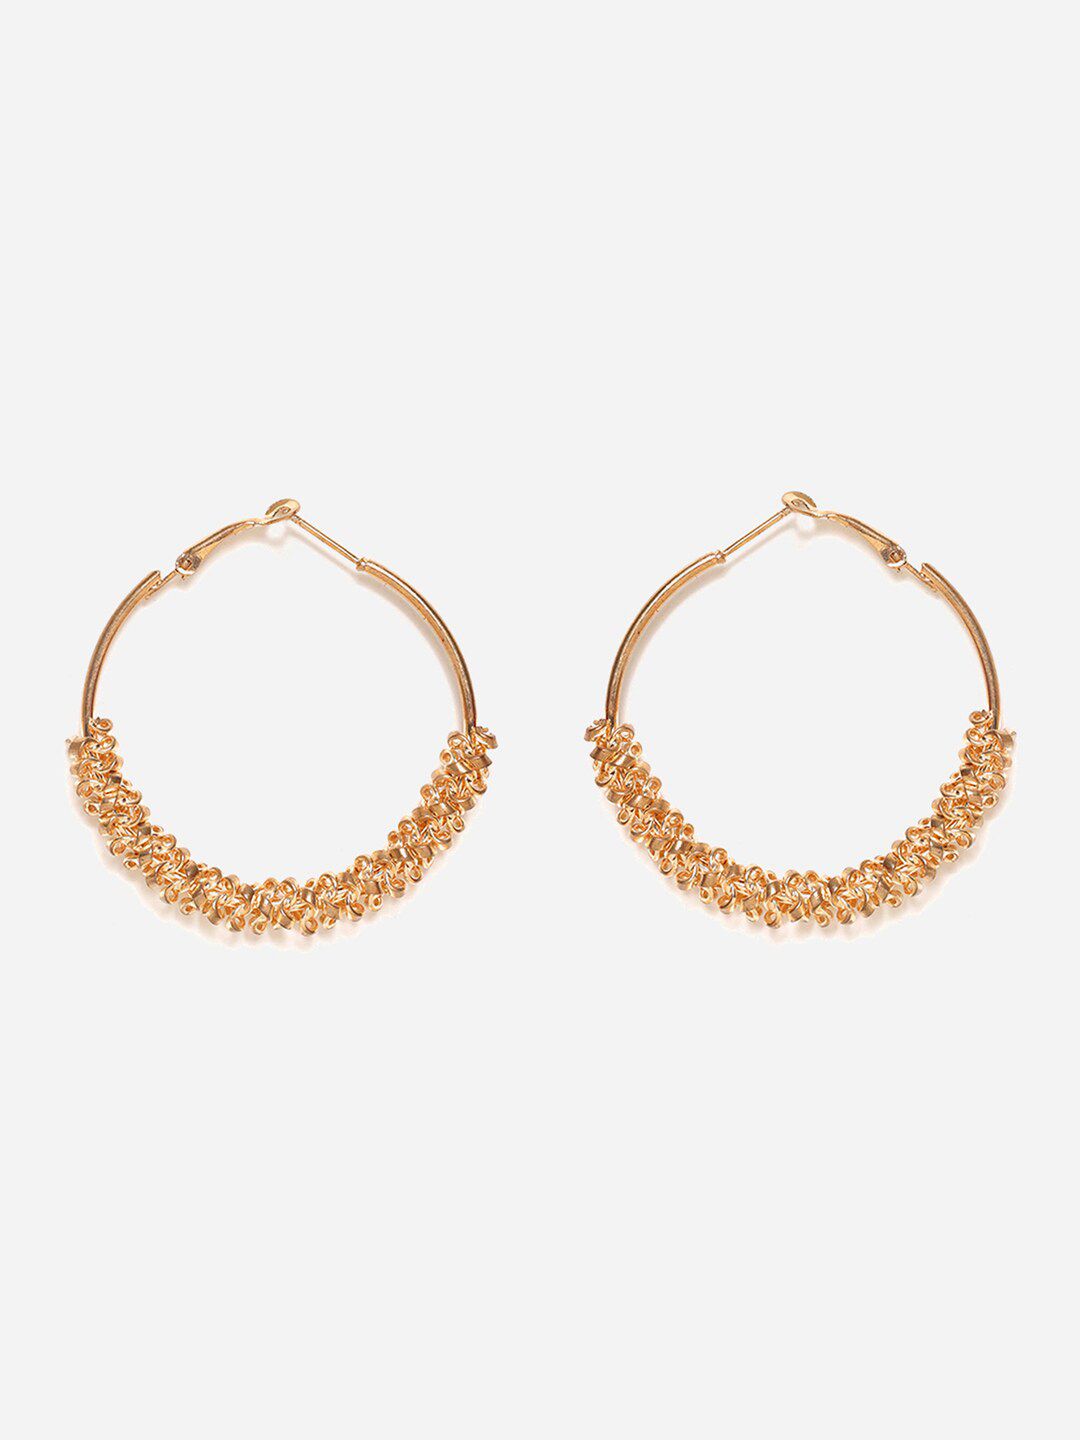 W Gold-Toned Circular Hoop Earrings Price in India